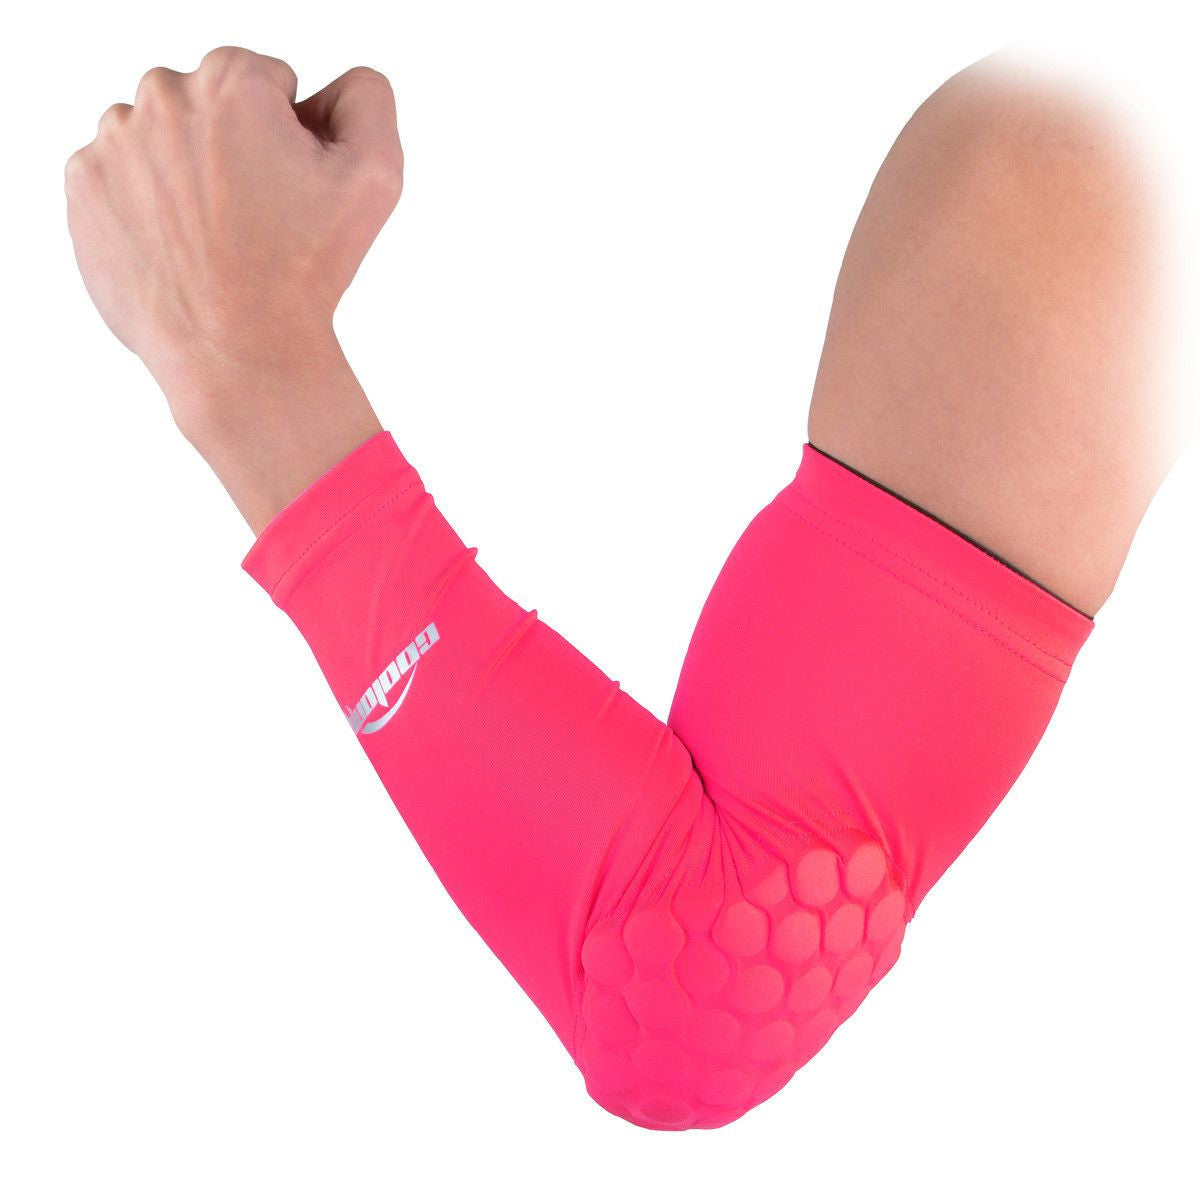 Football Arm Sleeve with Stick Grips SH002 – COOLOMG - Football